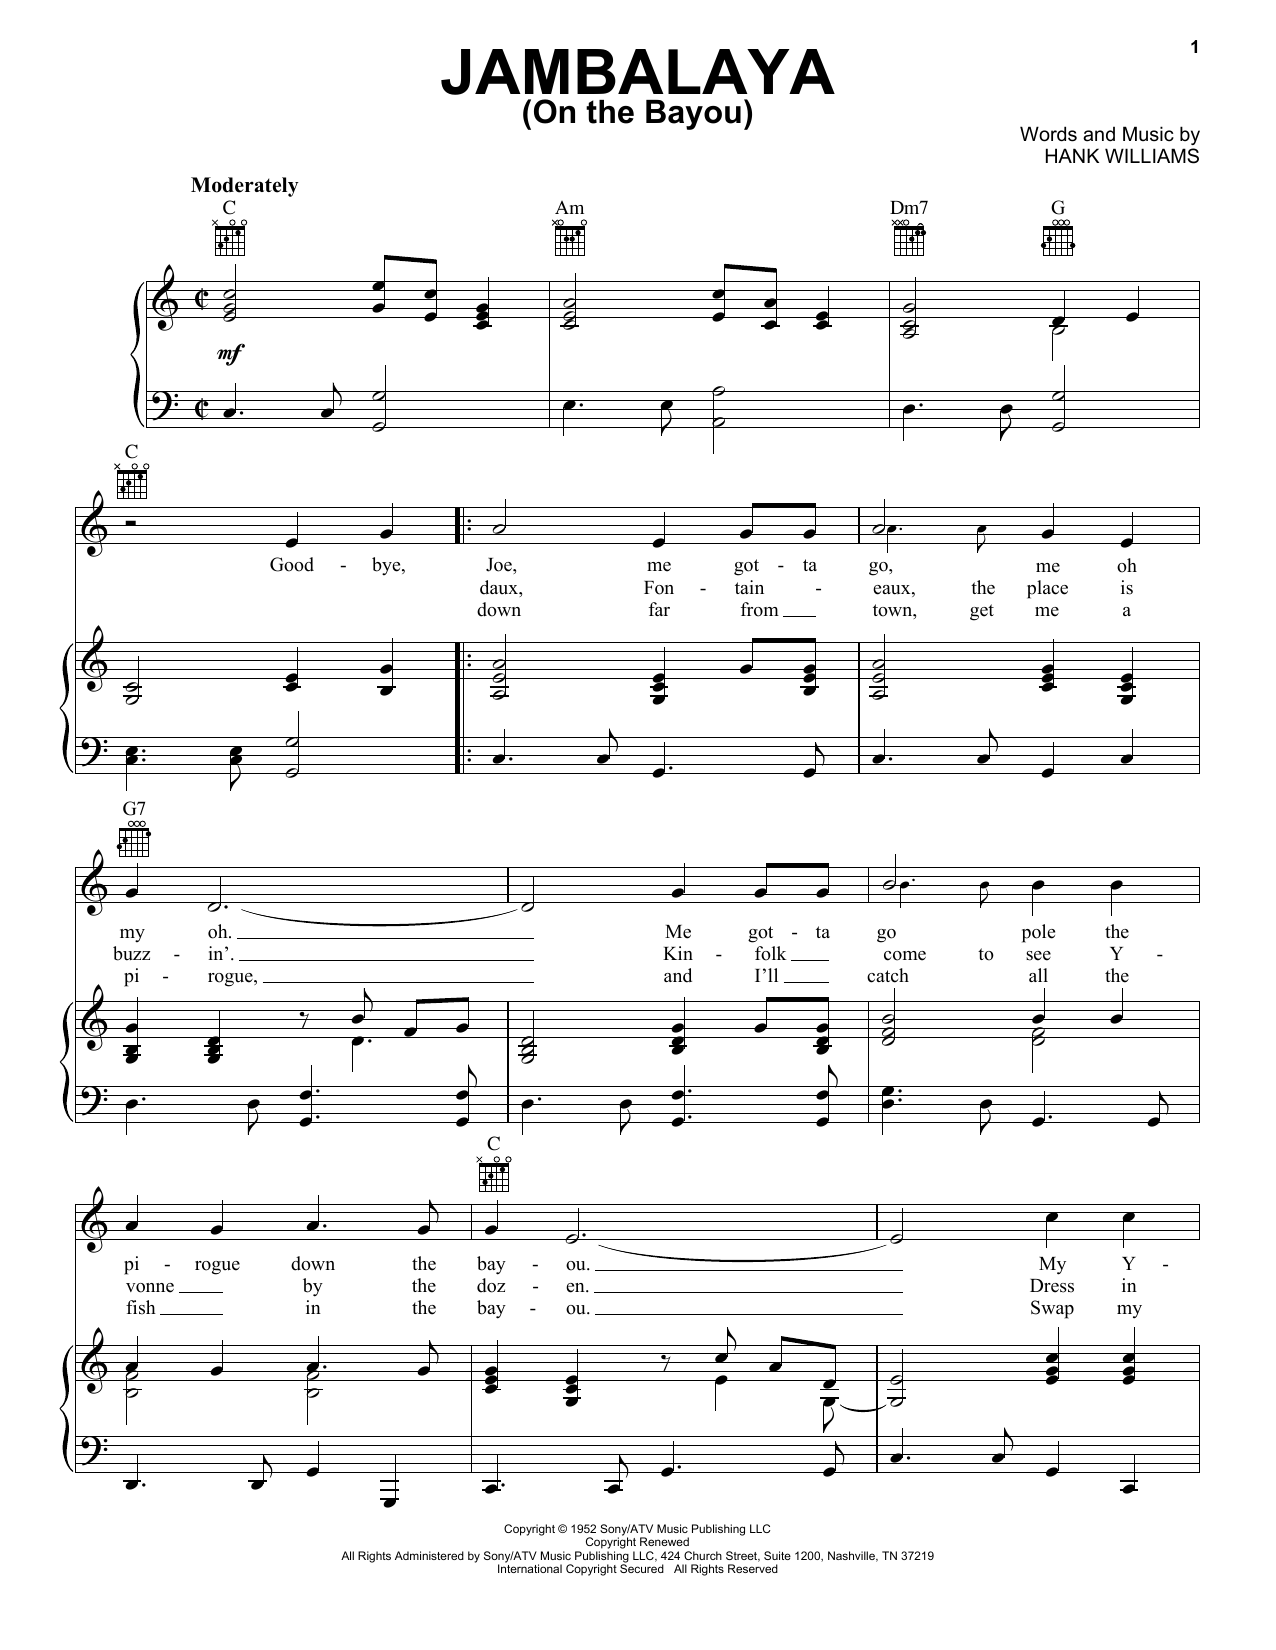 Hank Williams Jambalaya (On The Bayou) Sheet Music Notes & Chords for Banjo - Download or Print PDF